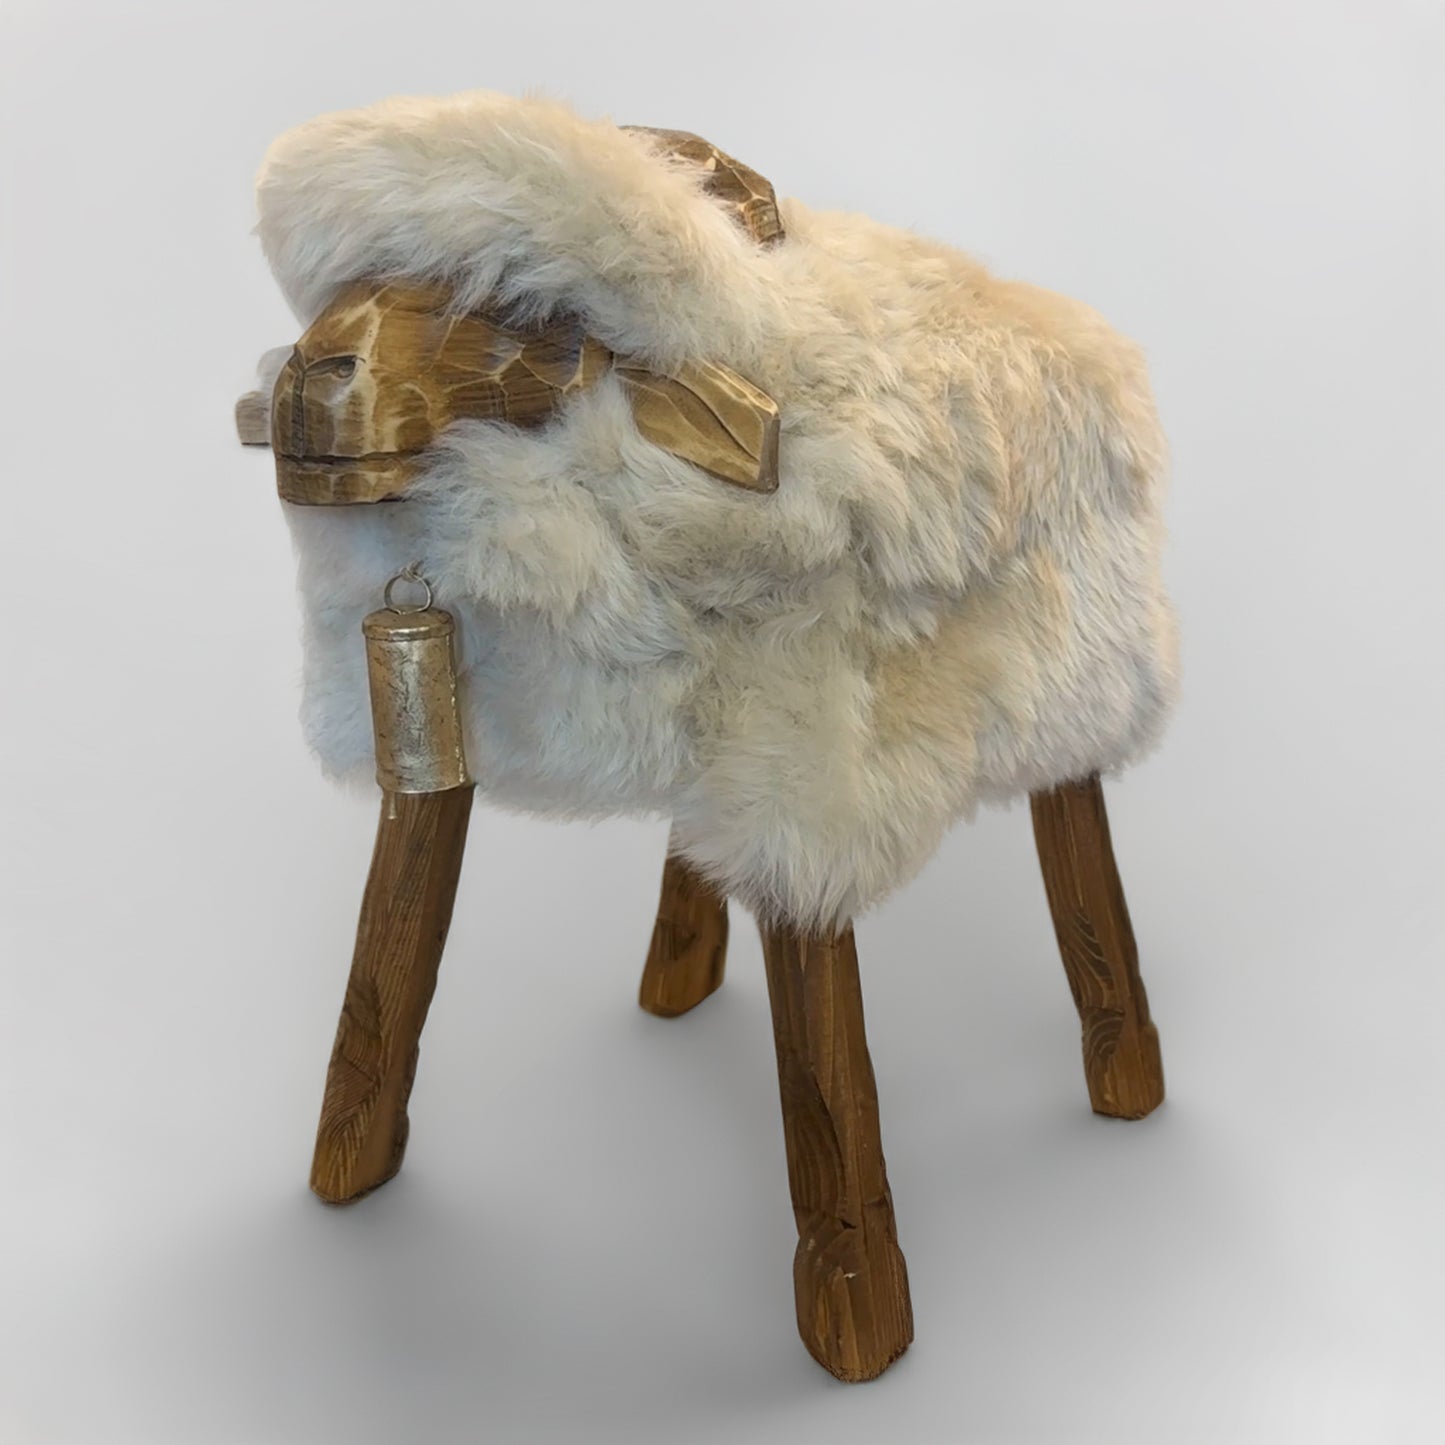 Sheep stool ➳ Toni the elegant Bua ➳ champagne stool designer animal stool